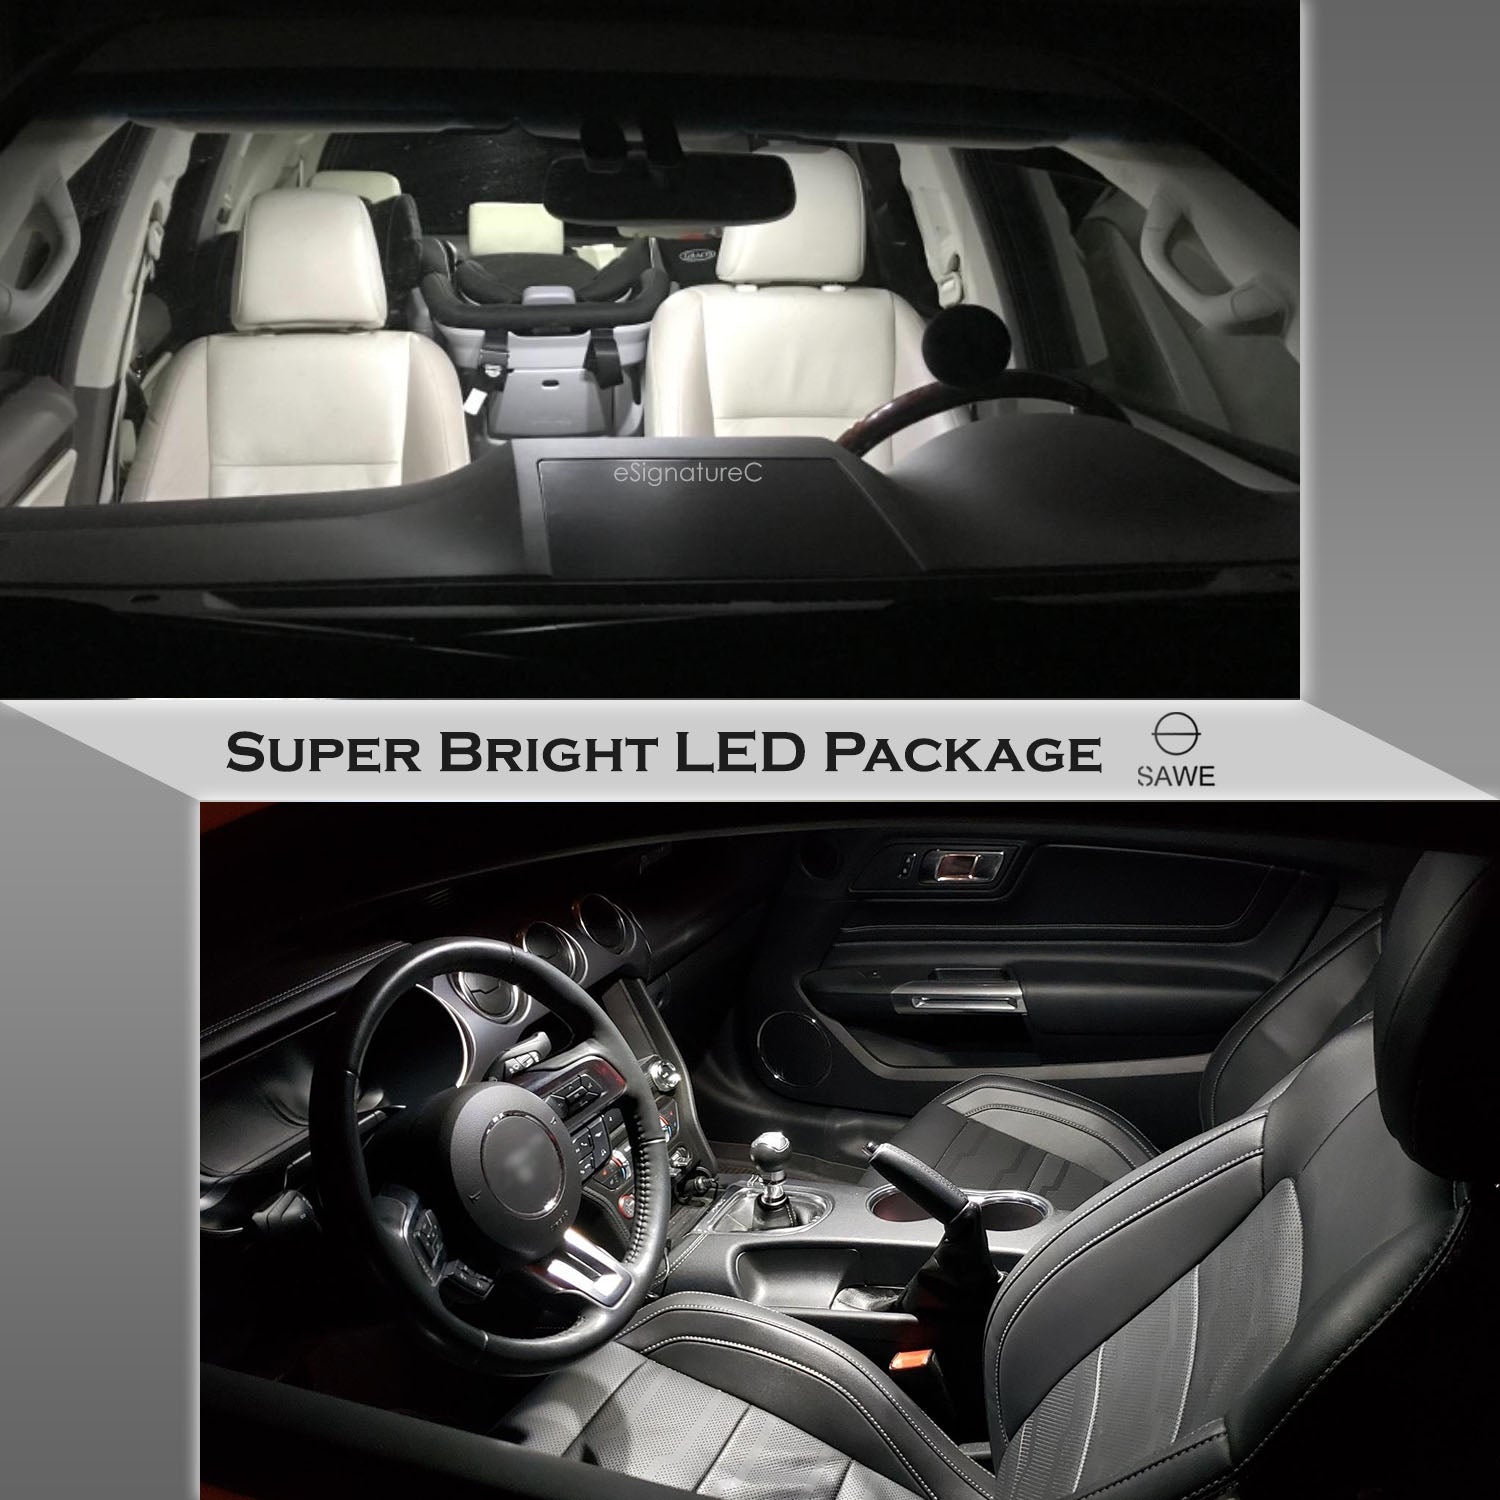 For BMW 530 535 550 E60 5 Series Interior LED Lights - Dome & Map Light Bulb Package Kit for 2004 - 2010 - White